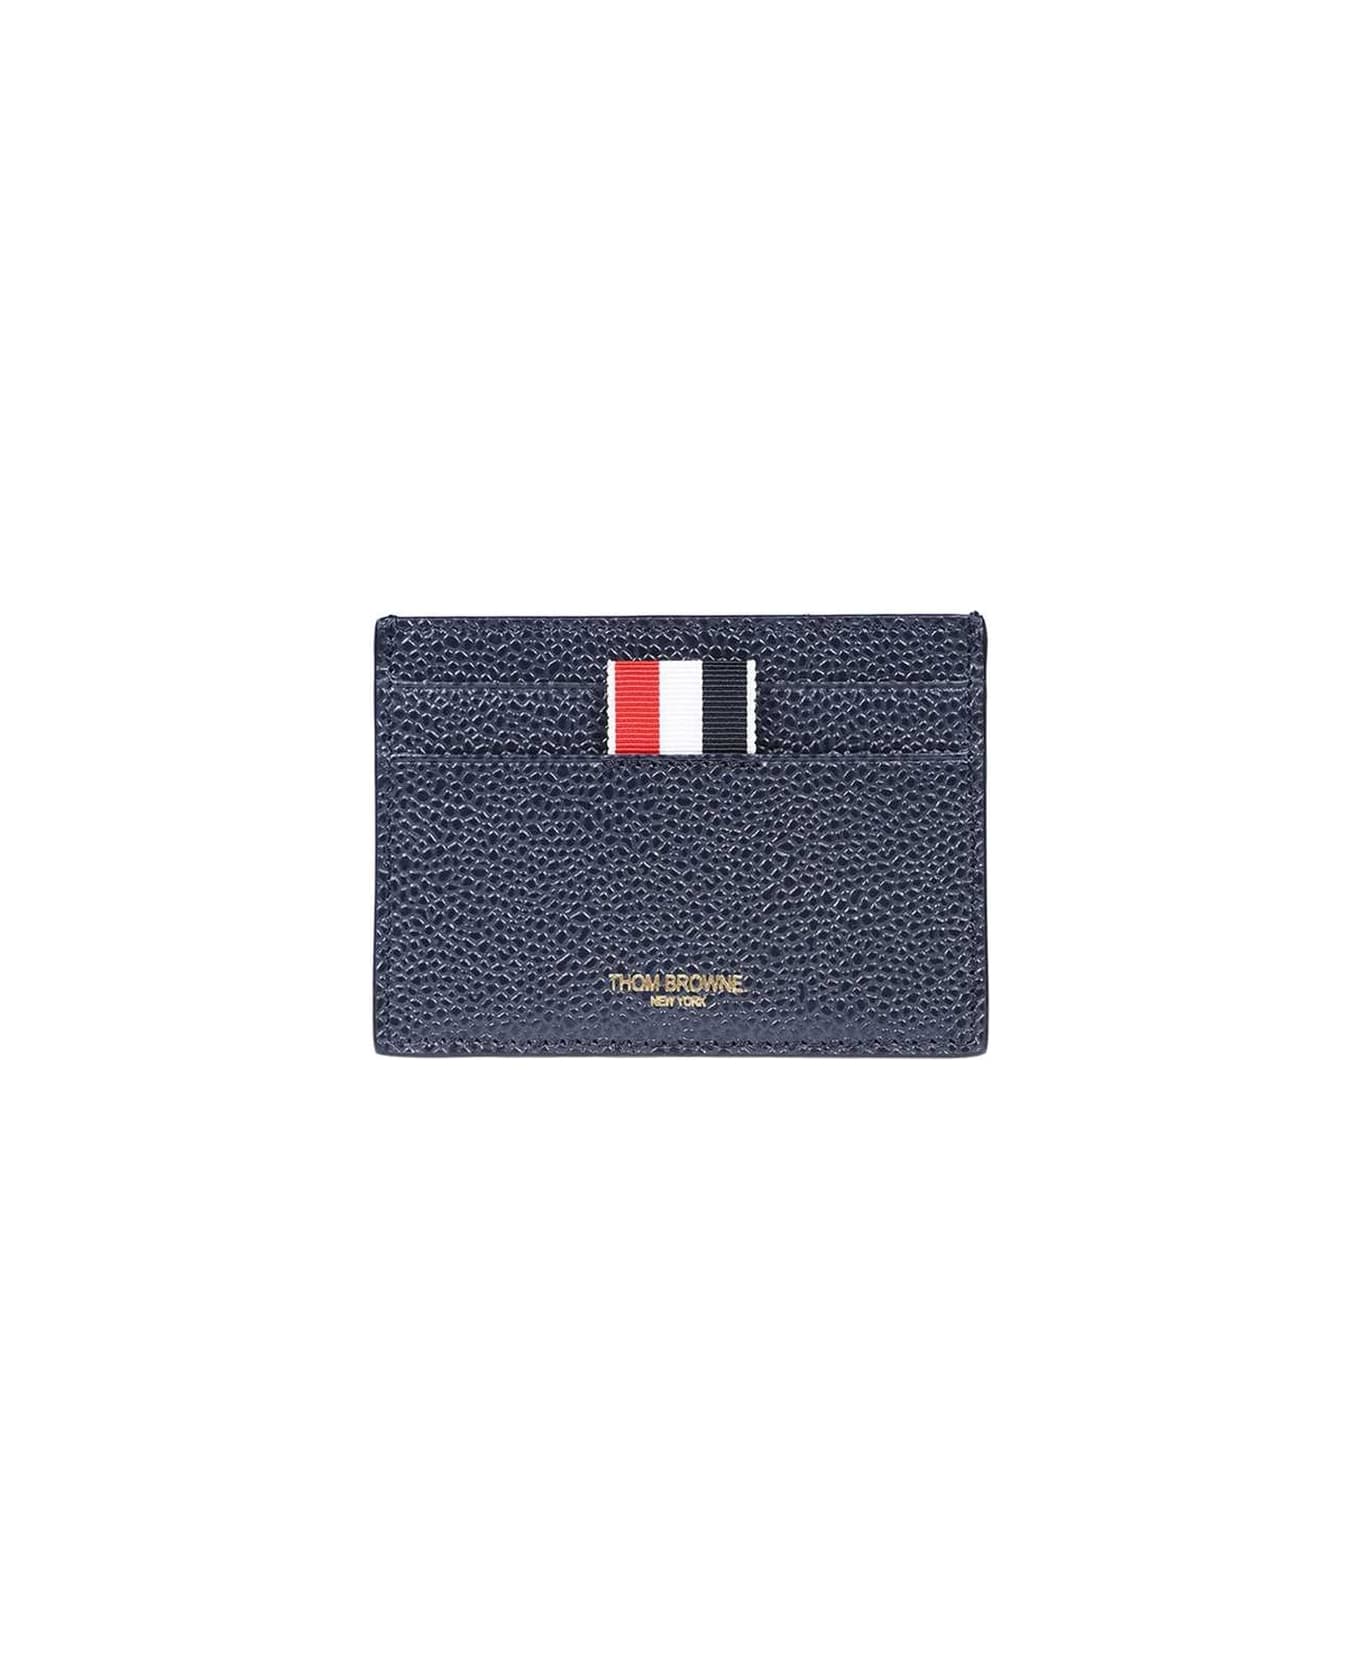 Thom Browne Leather Card Holder - Blue 財布